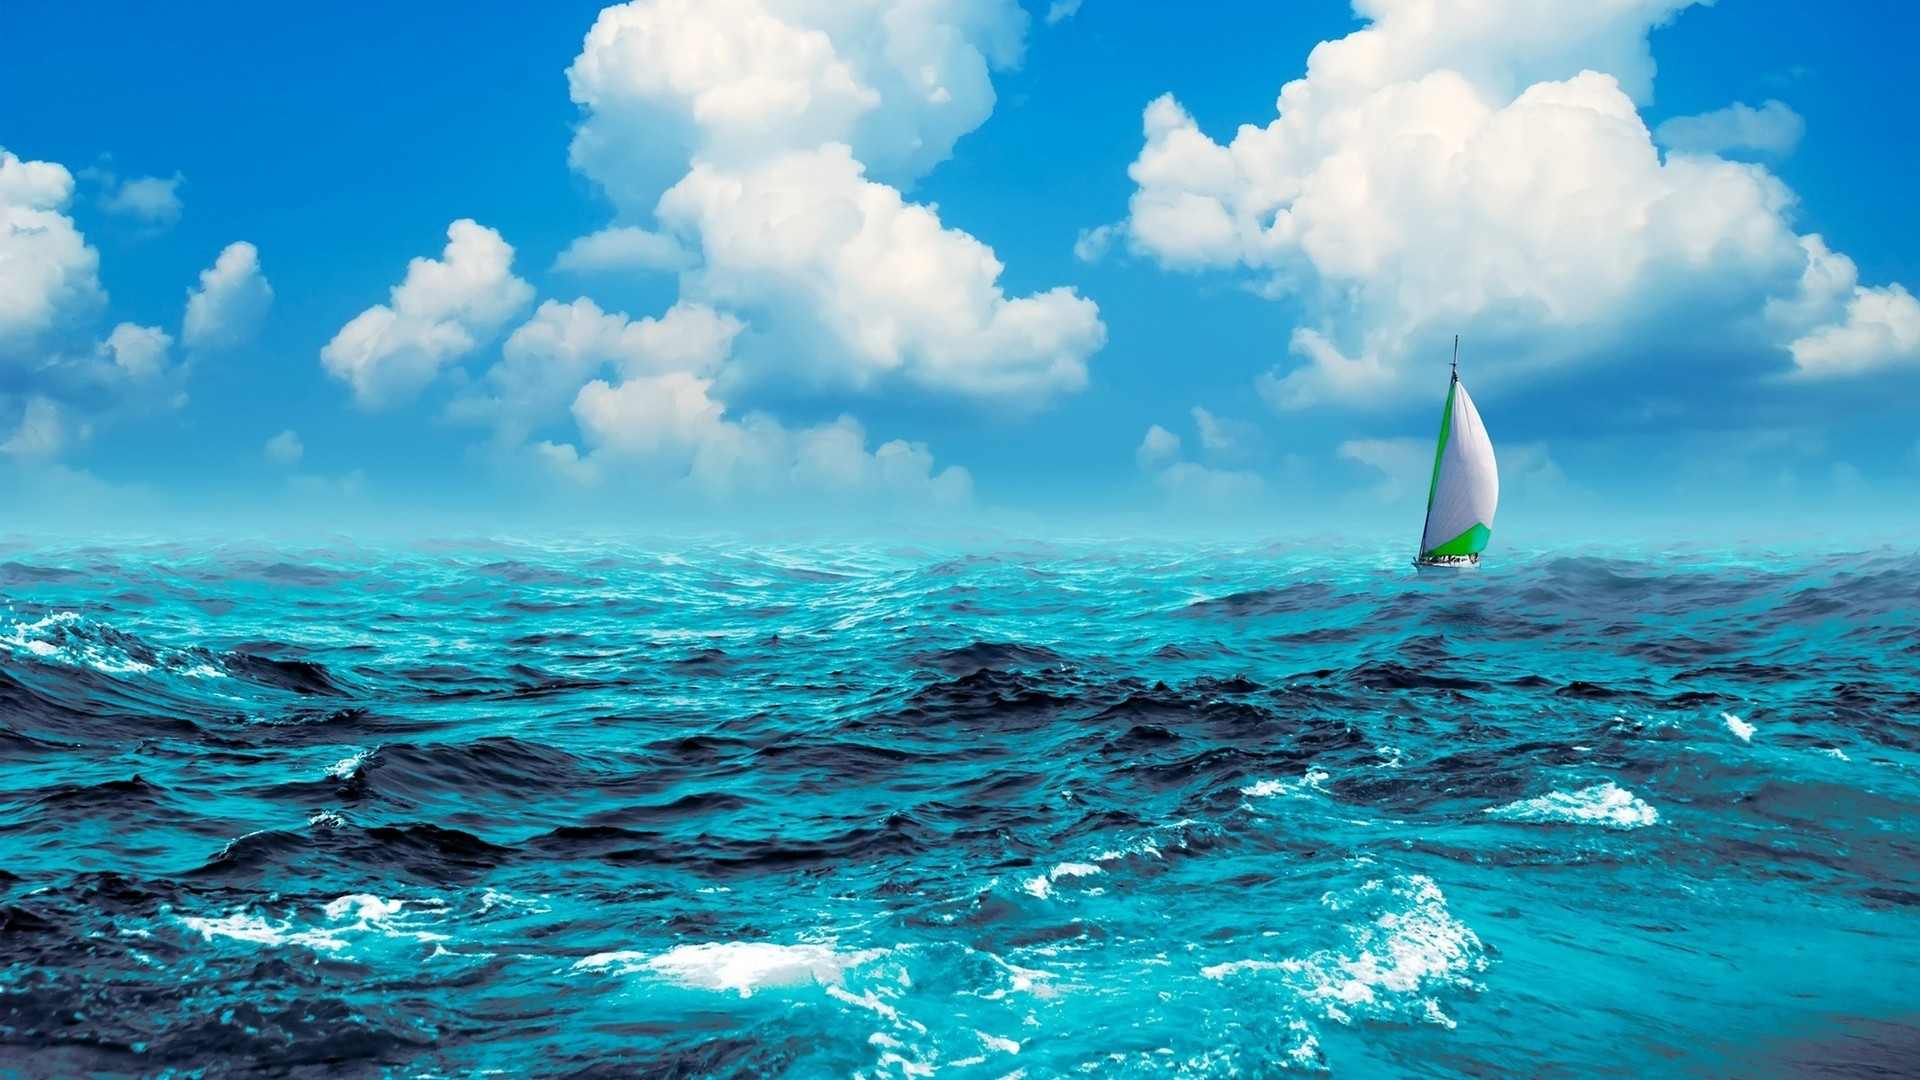 1920x1080 manipulation cg digital art artistic nature ocean sea waves swell water sky  clouds sailing sports boat